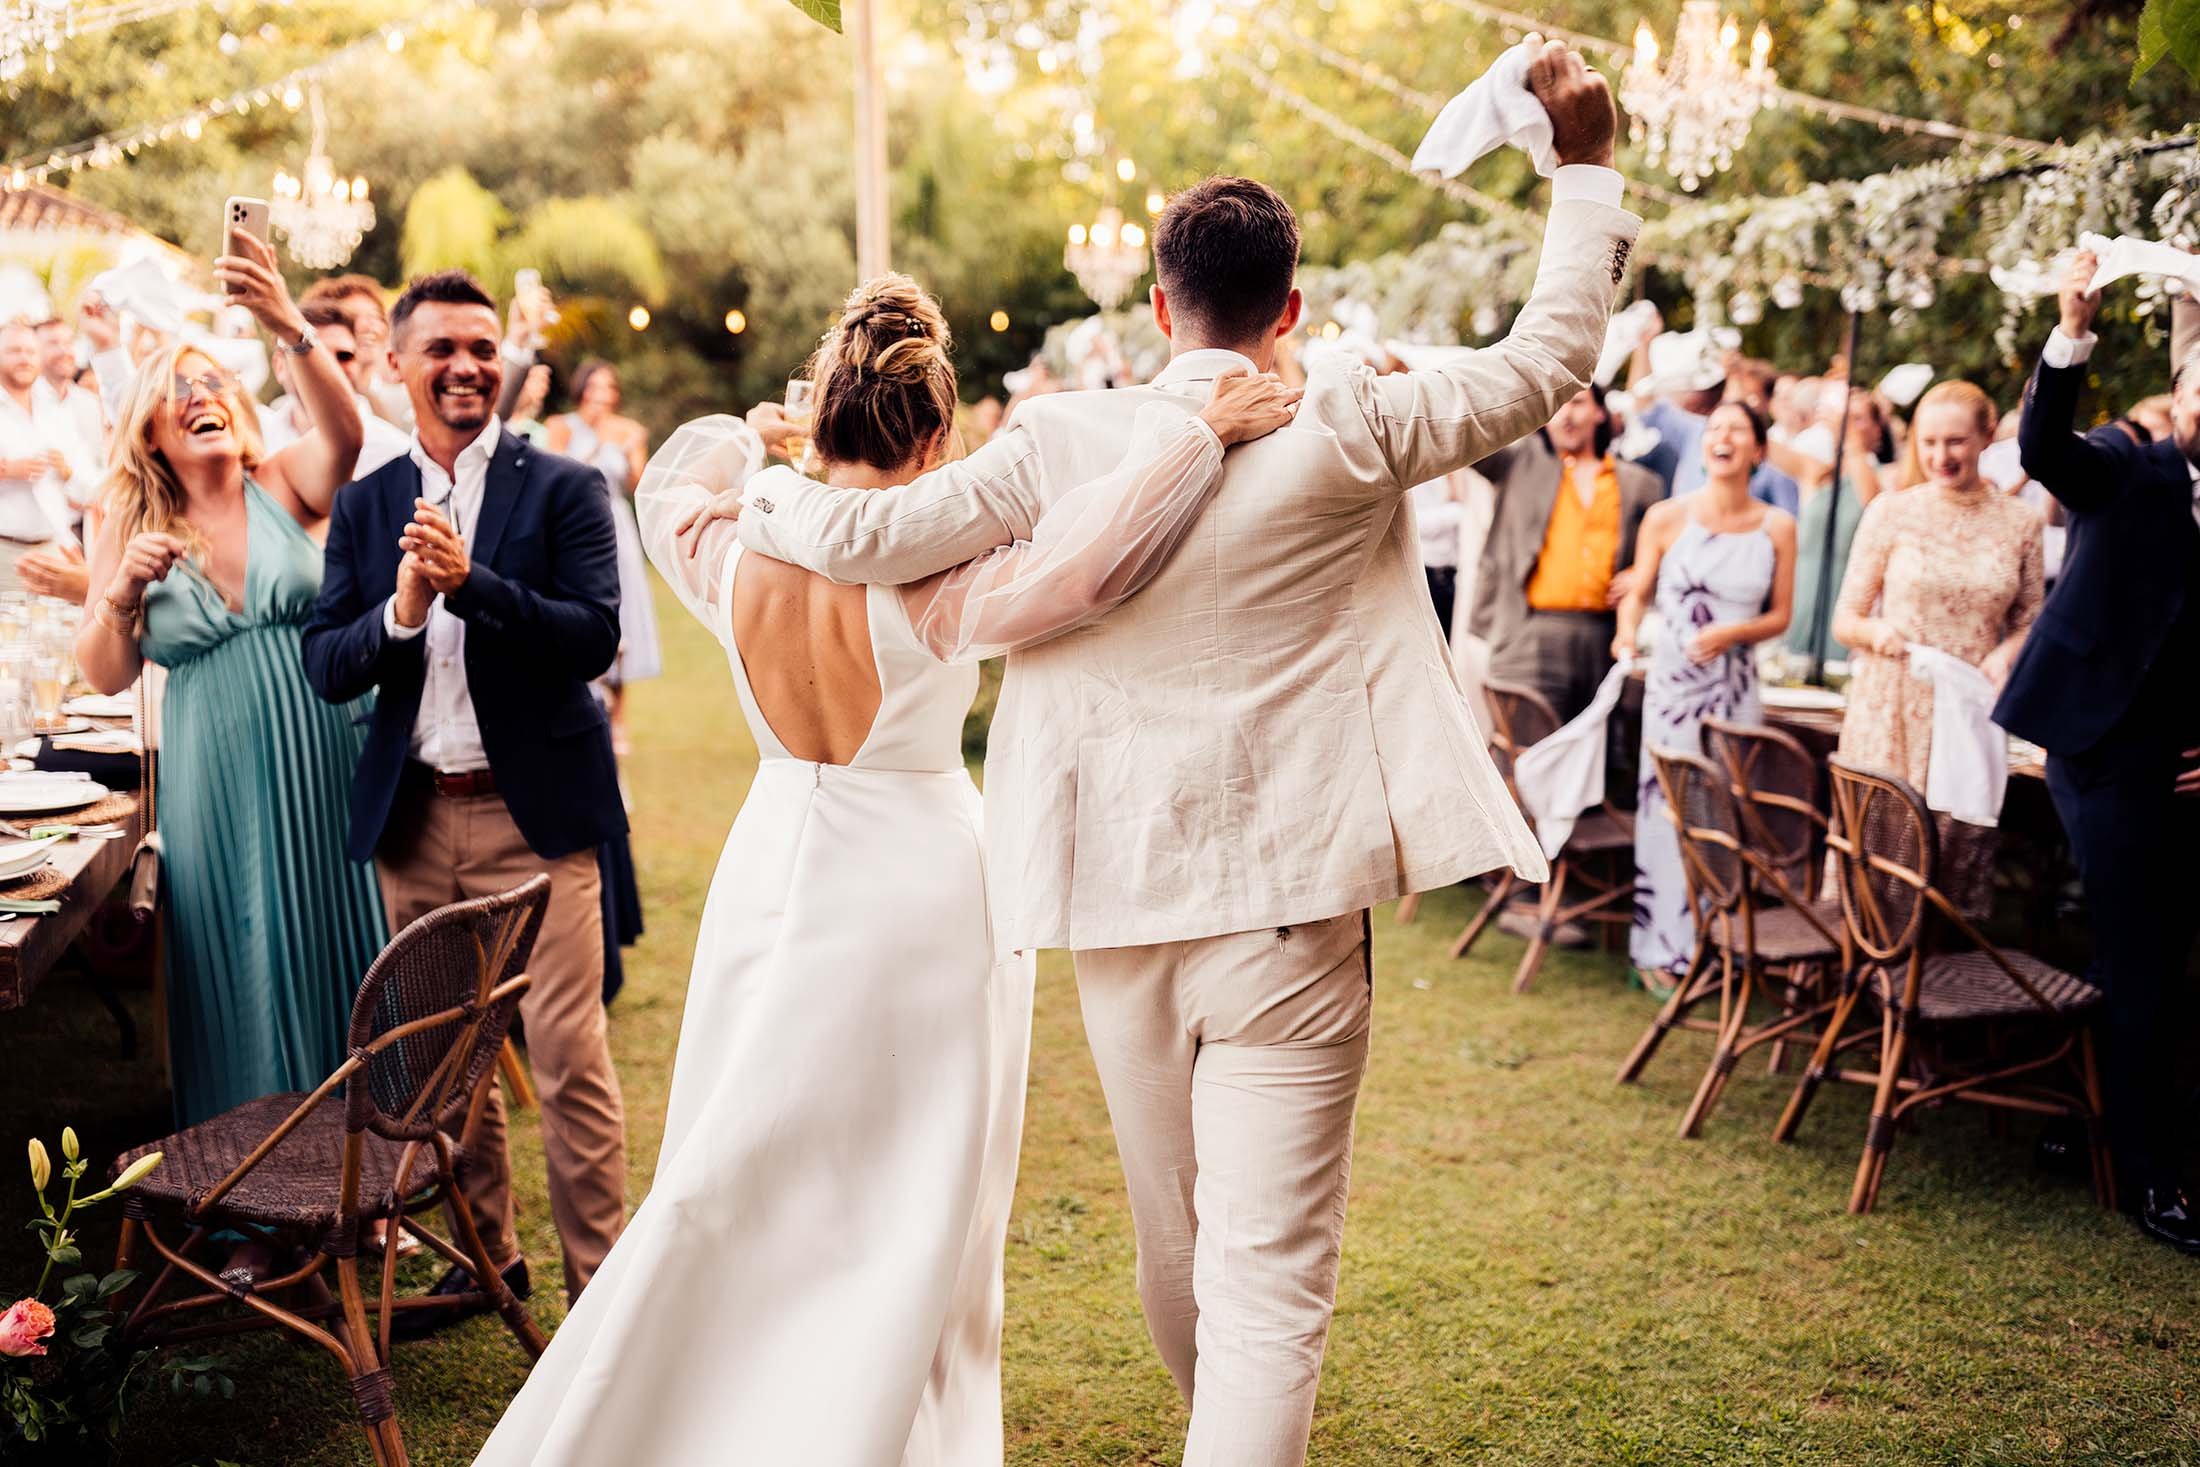 bride in jesus peiro dress and groom in cream linen suit enter outdoor dinner reception at finca monasterio wedding venue 